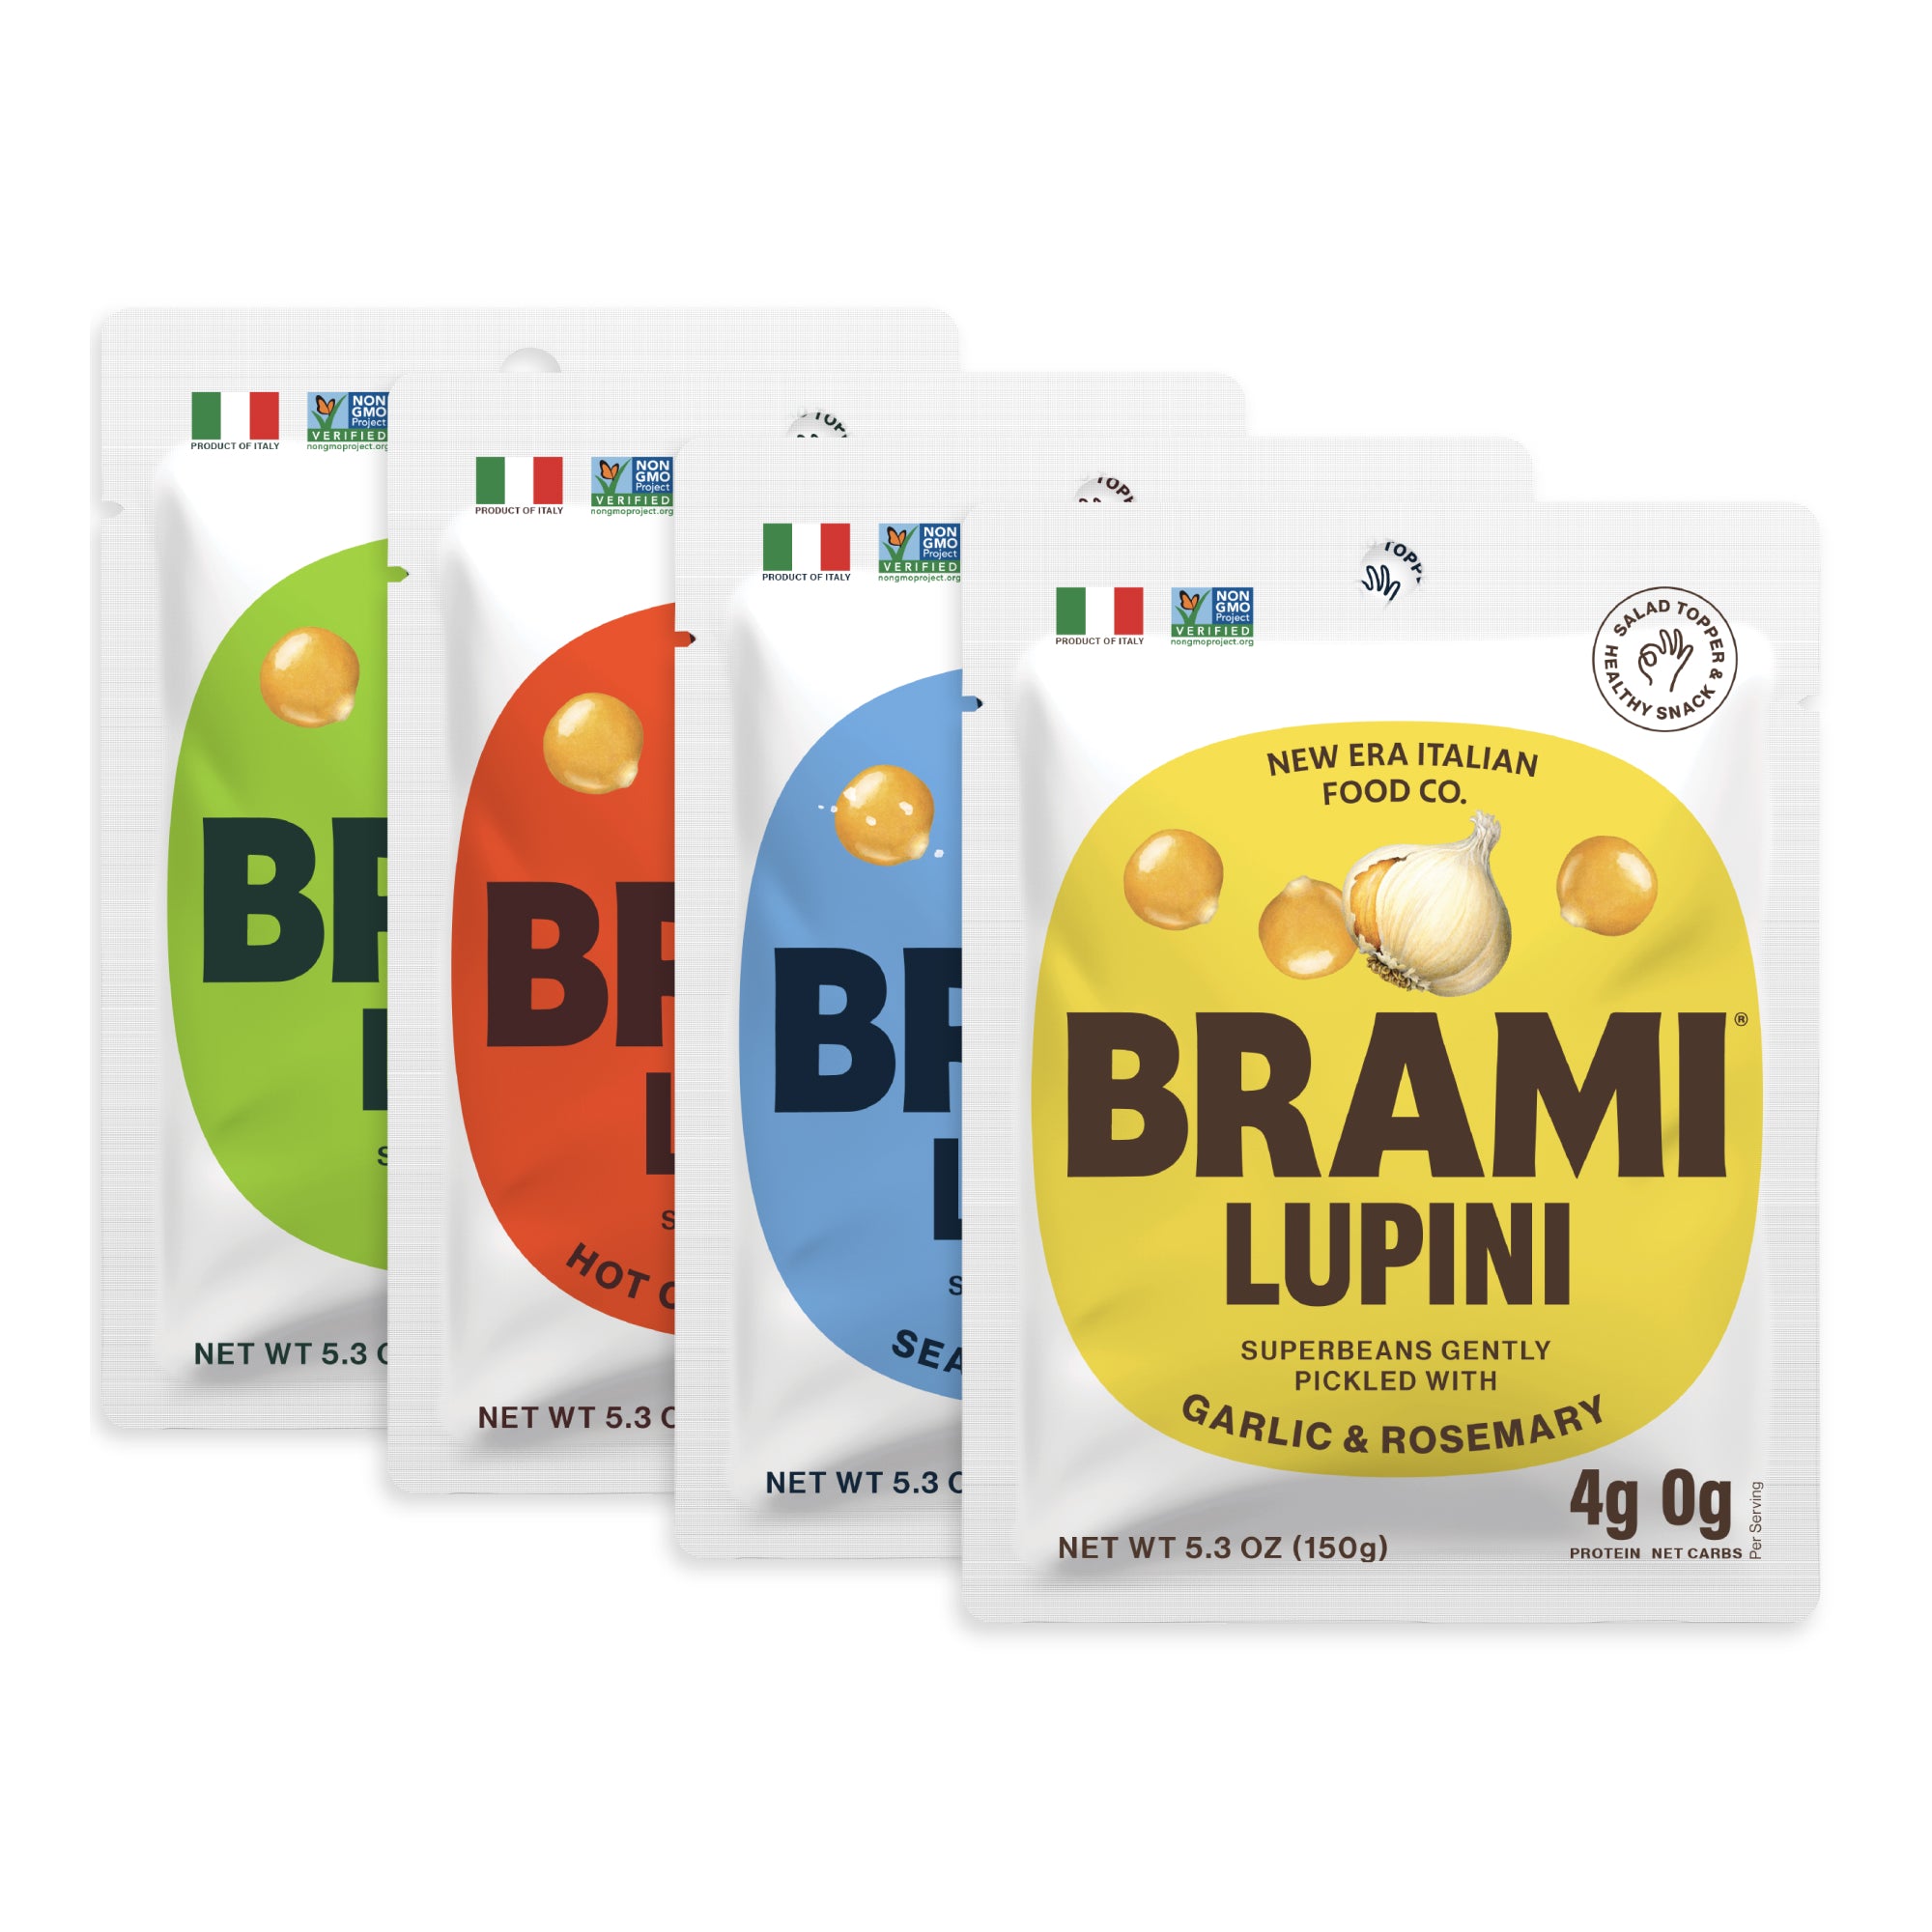 BRAMI Lupini Beans Snack, Hot Chili Pepper, 7g Plant Protein, 0g Net Carbs, Vegan, Vegetarian, Keto, Mediterranean Diet